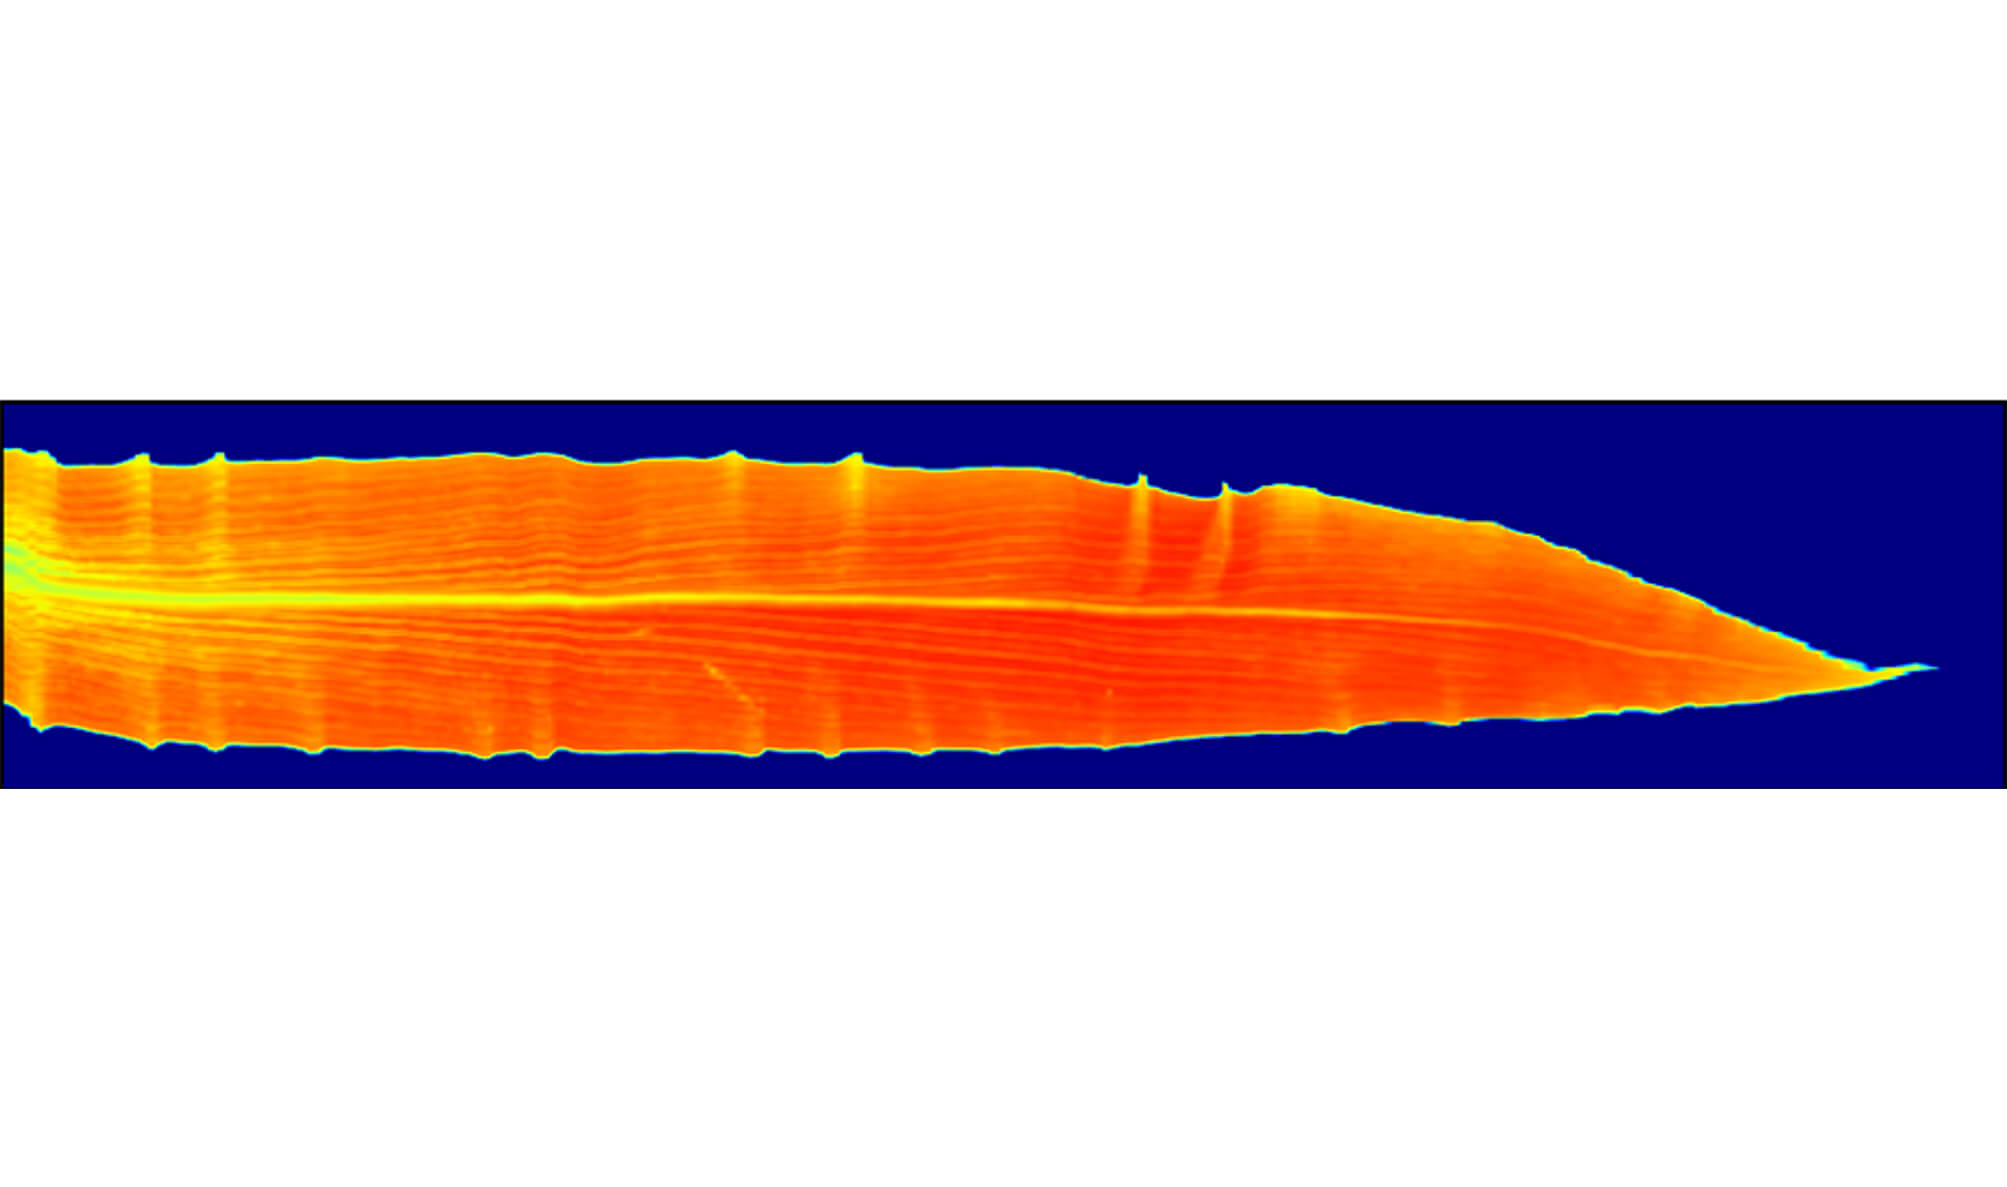 NDVI heat map of a corn leaf